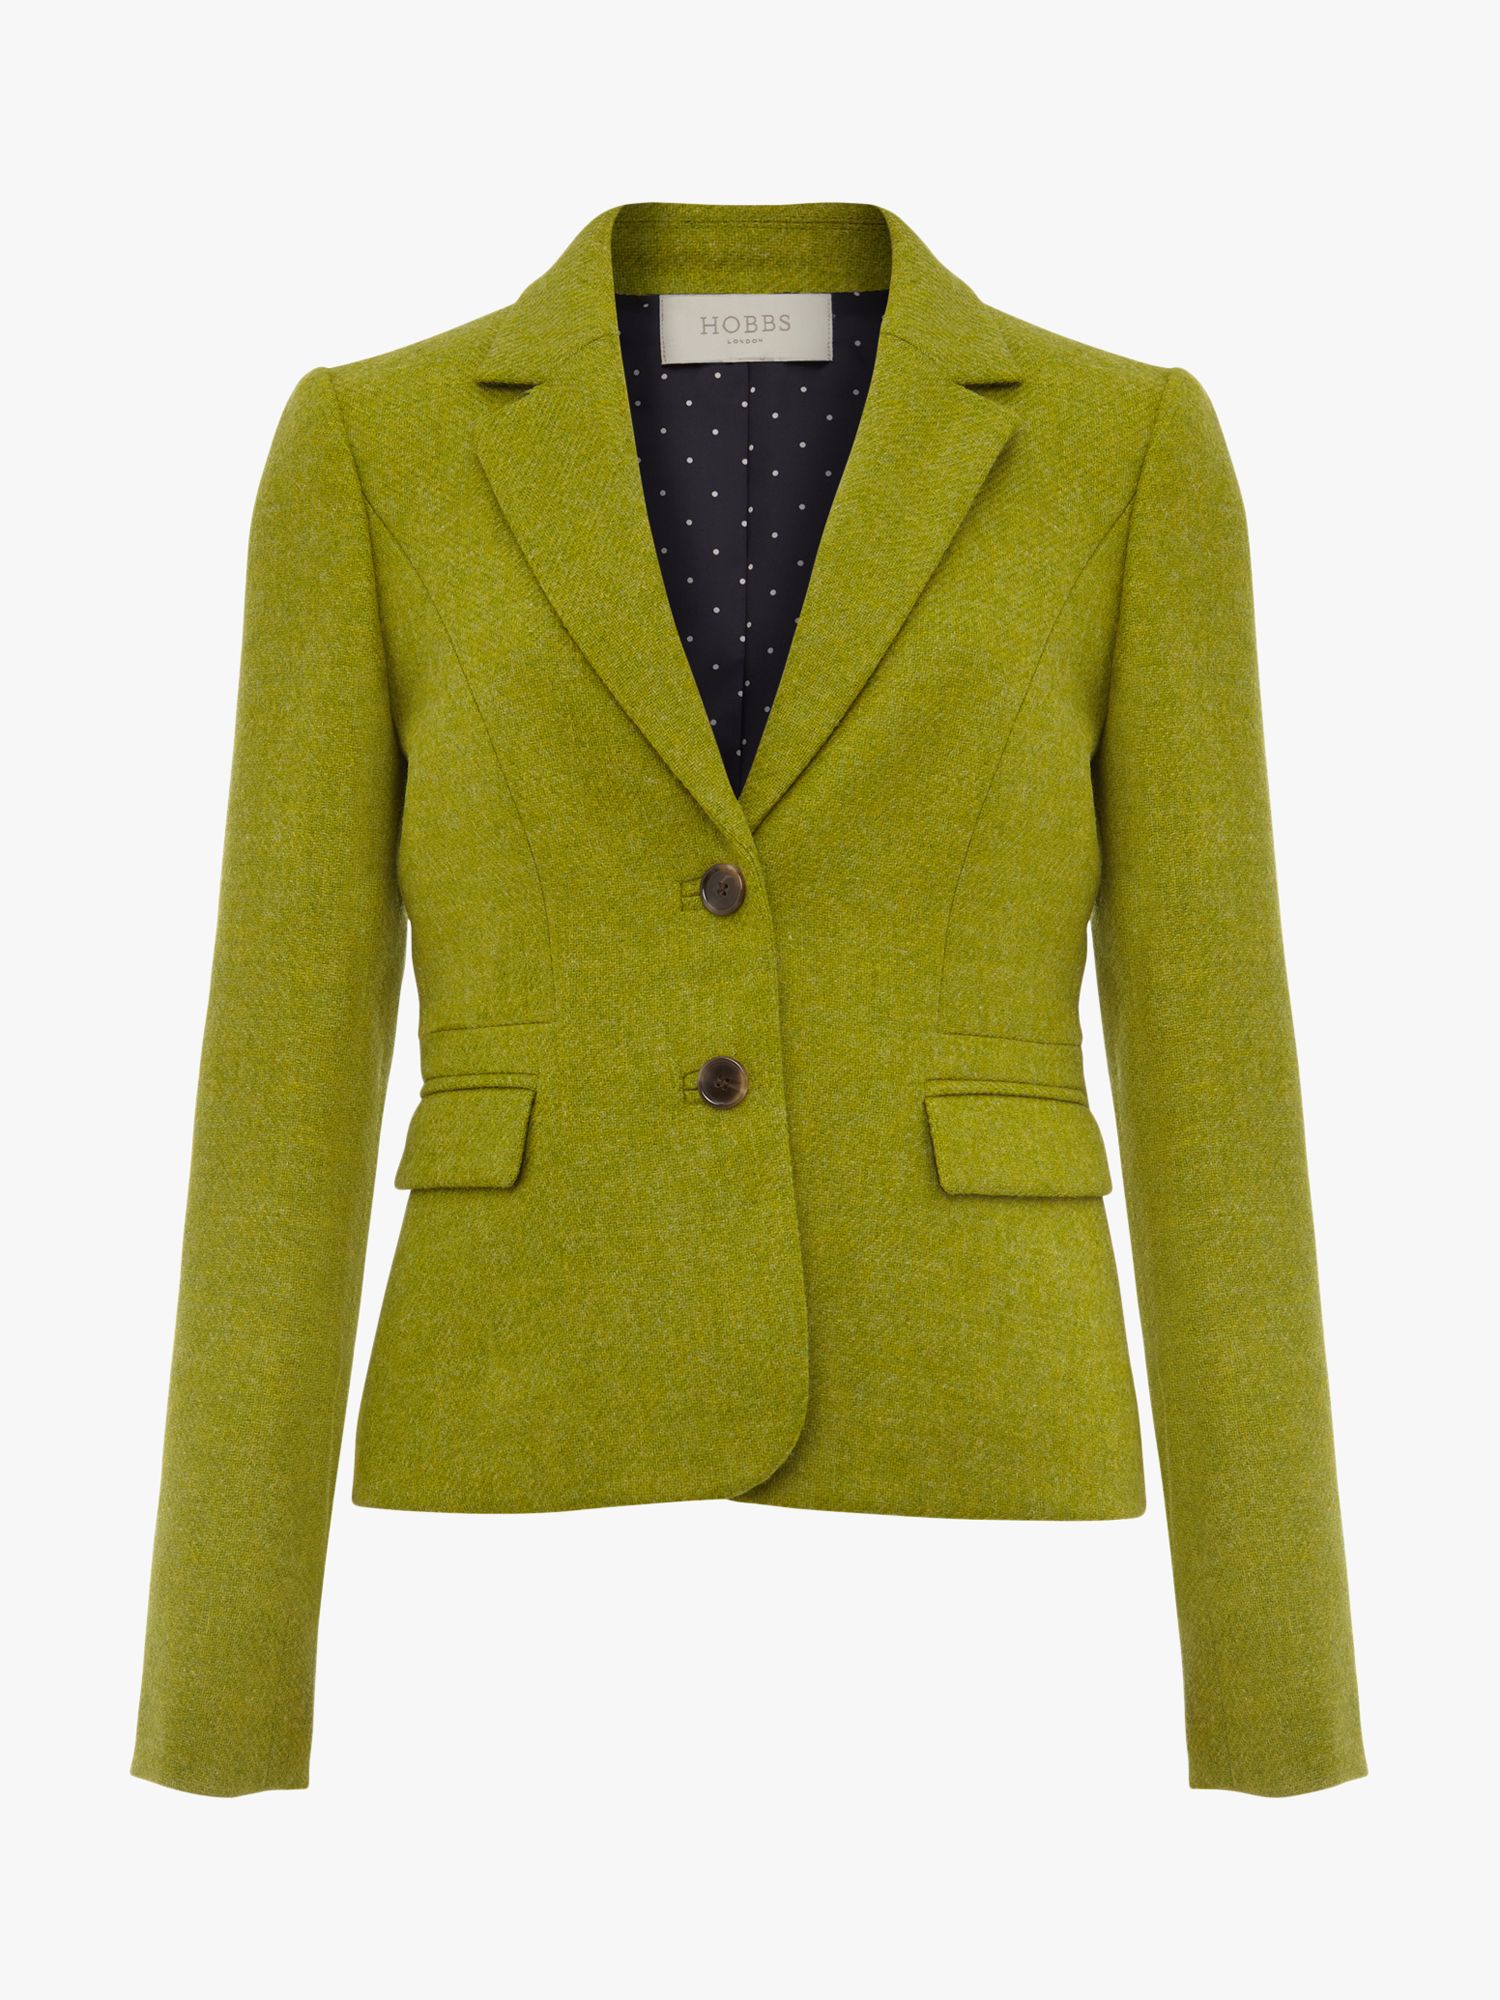 Hobbs Hackness Wool Jacket, Lime Green at John Lewis & Partners